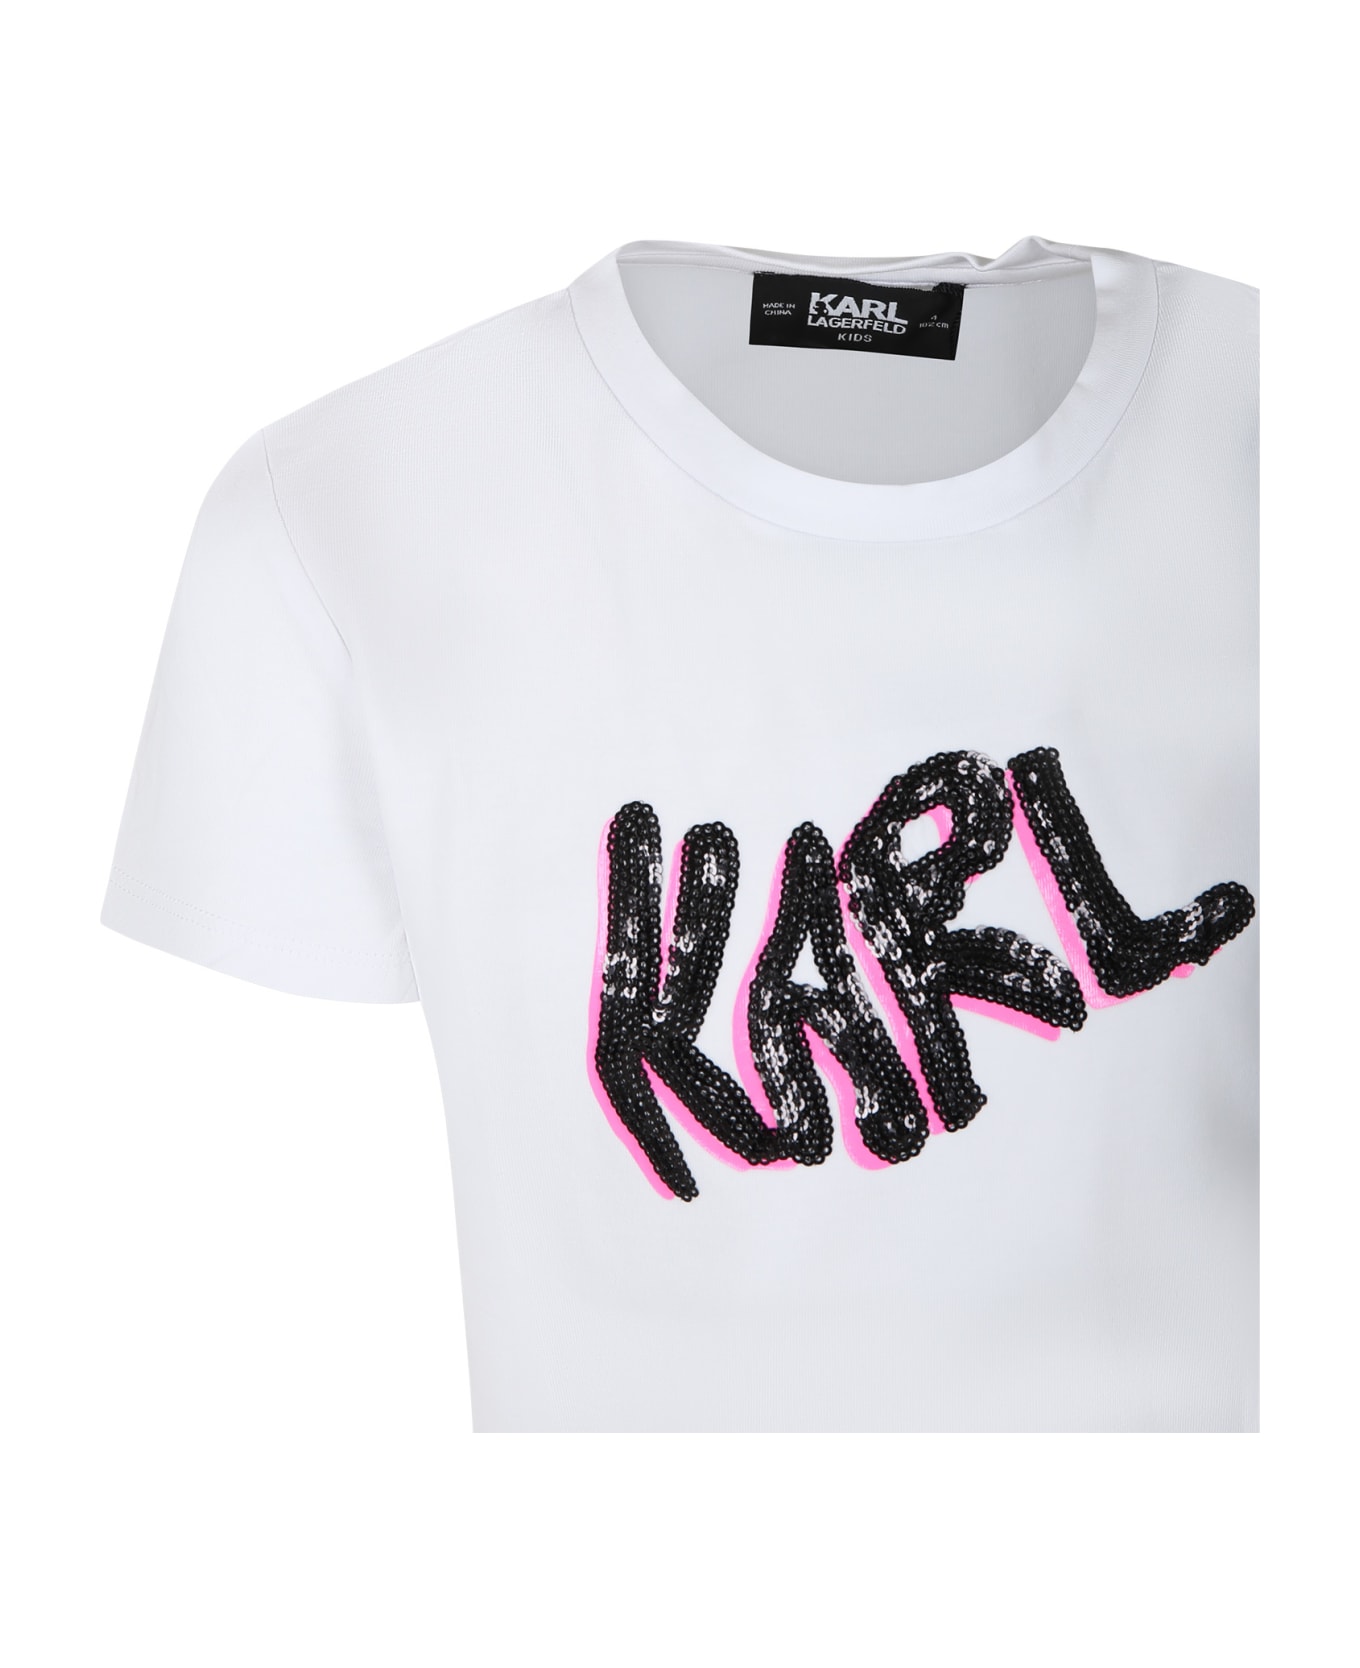 Karl Lagerfeld Kids White T-shirt For Girl With Karl Writing - White